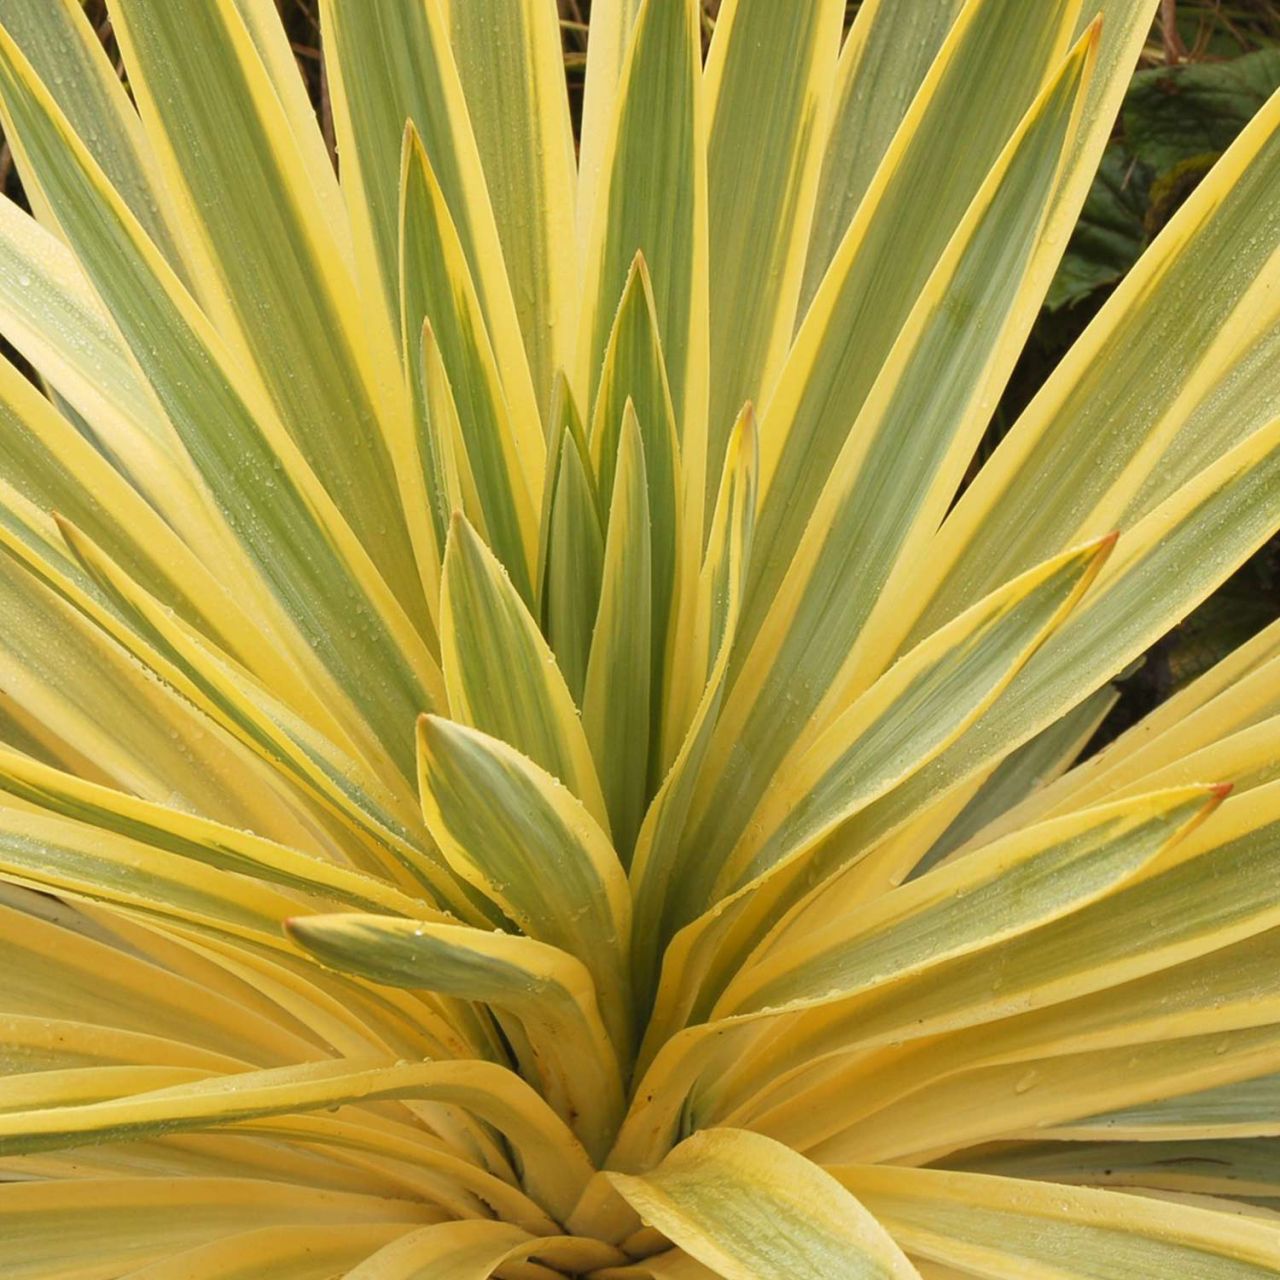 Kategorie <b>Stauden </b> - Palmlilie 'Bright Edge' - Yucca filamentosa 'Bright Edge'